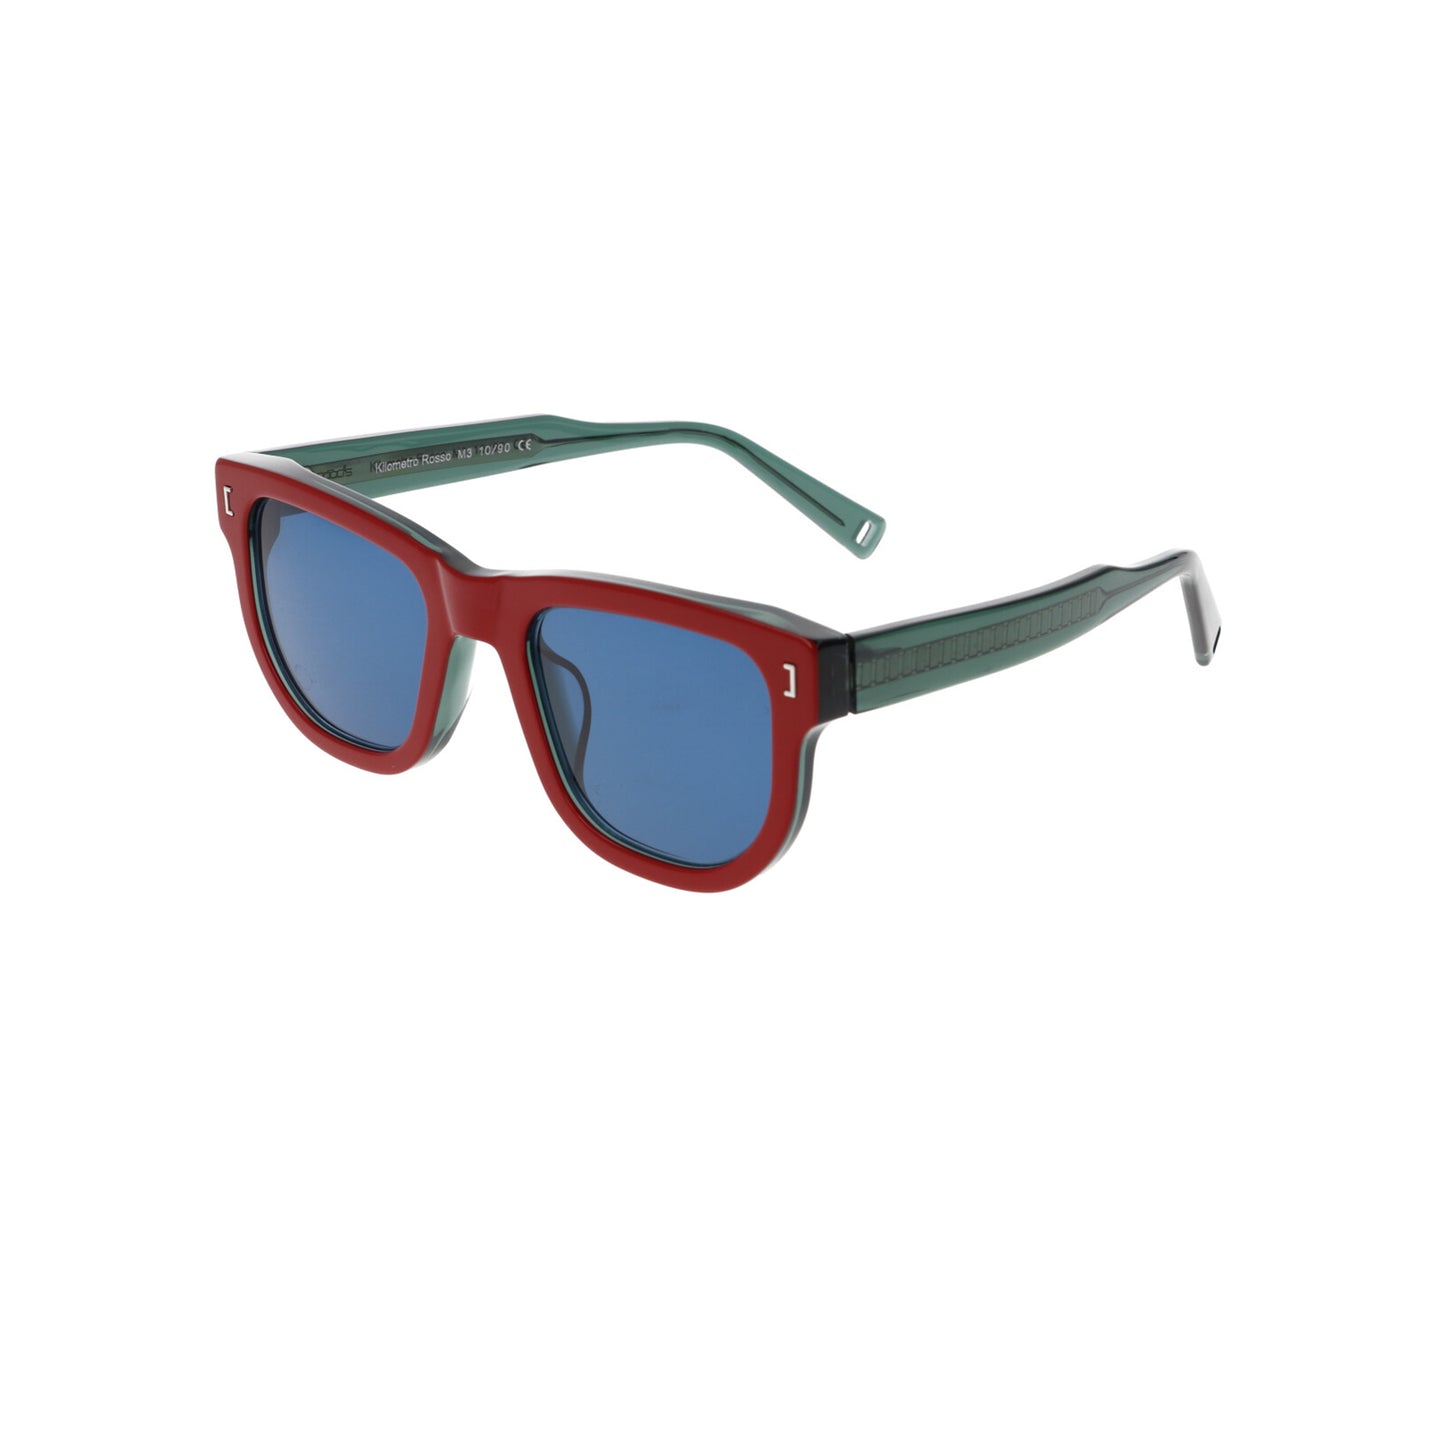 Kilometro Rosso M3 Sunglasses